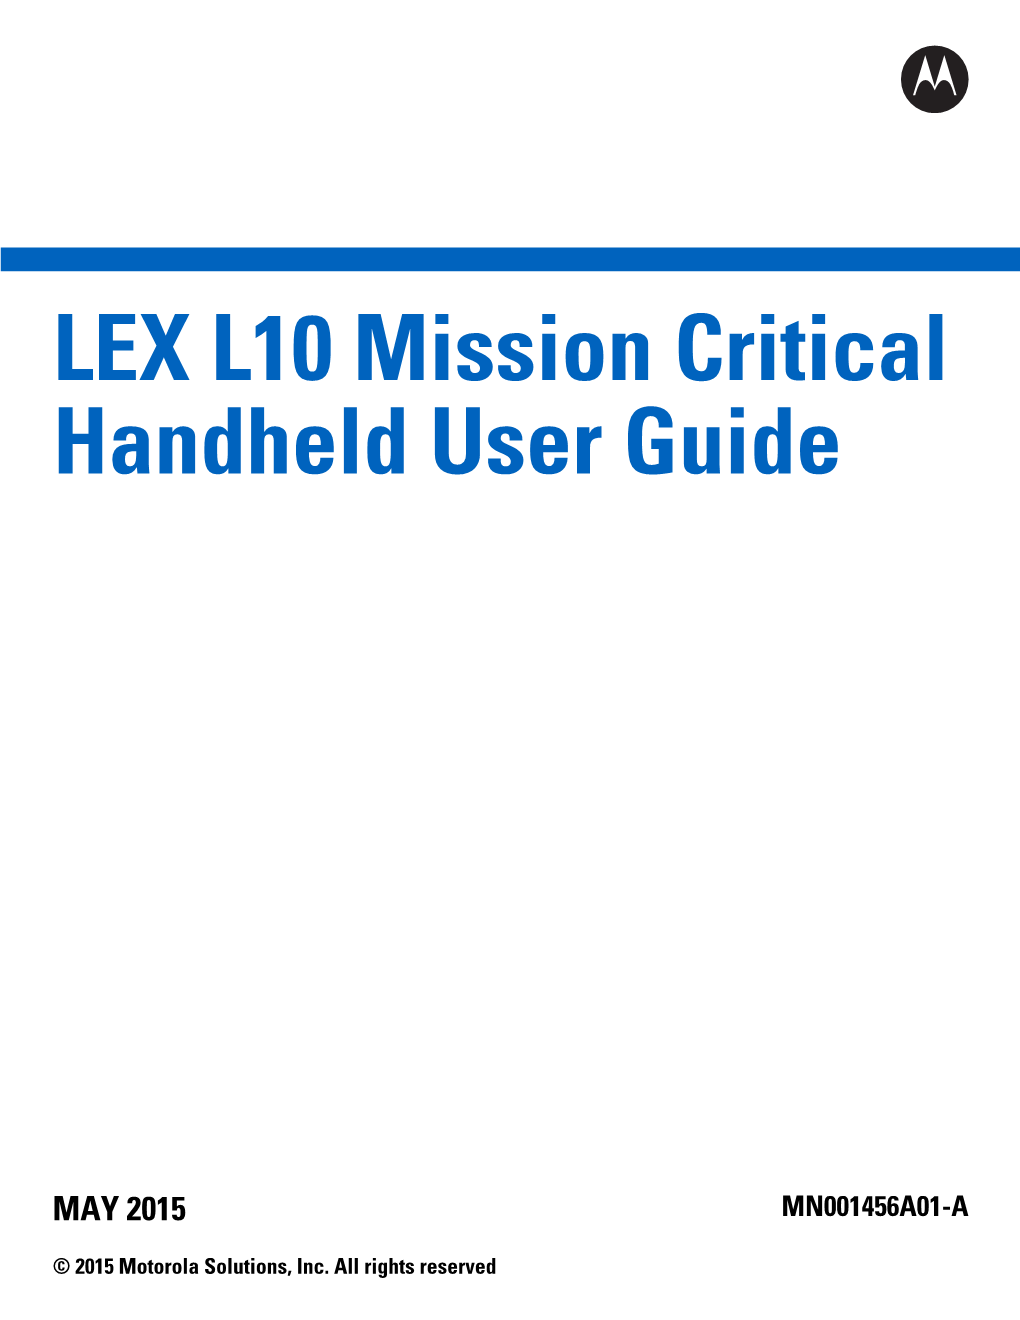 LEX L10 Mission Critical Handheld User Guide